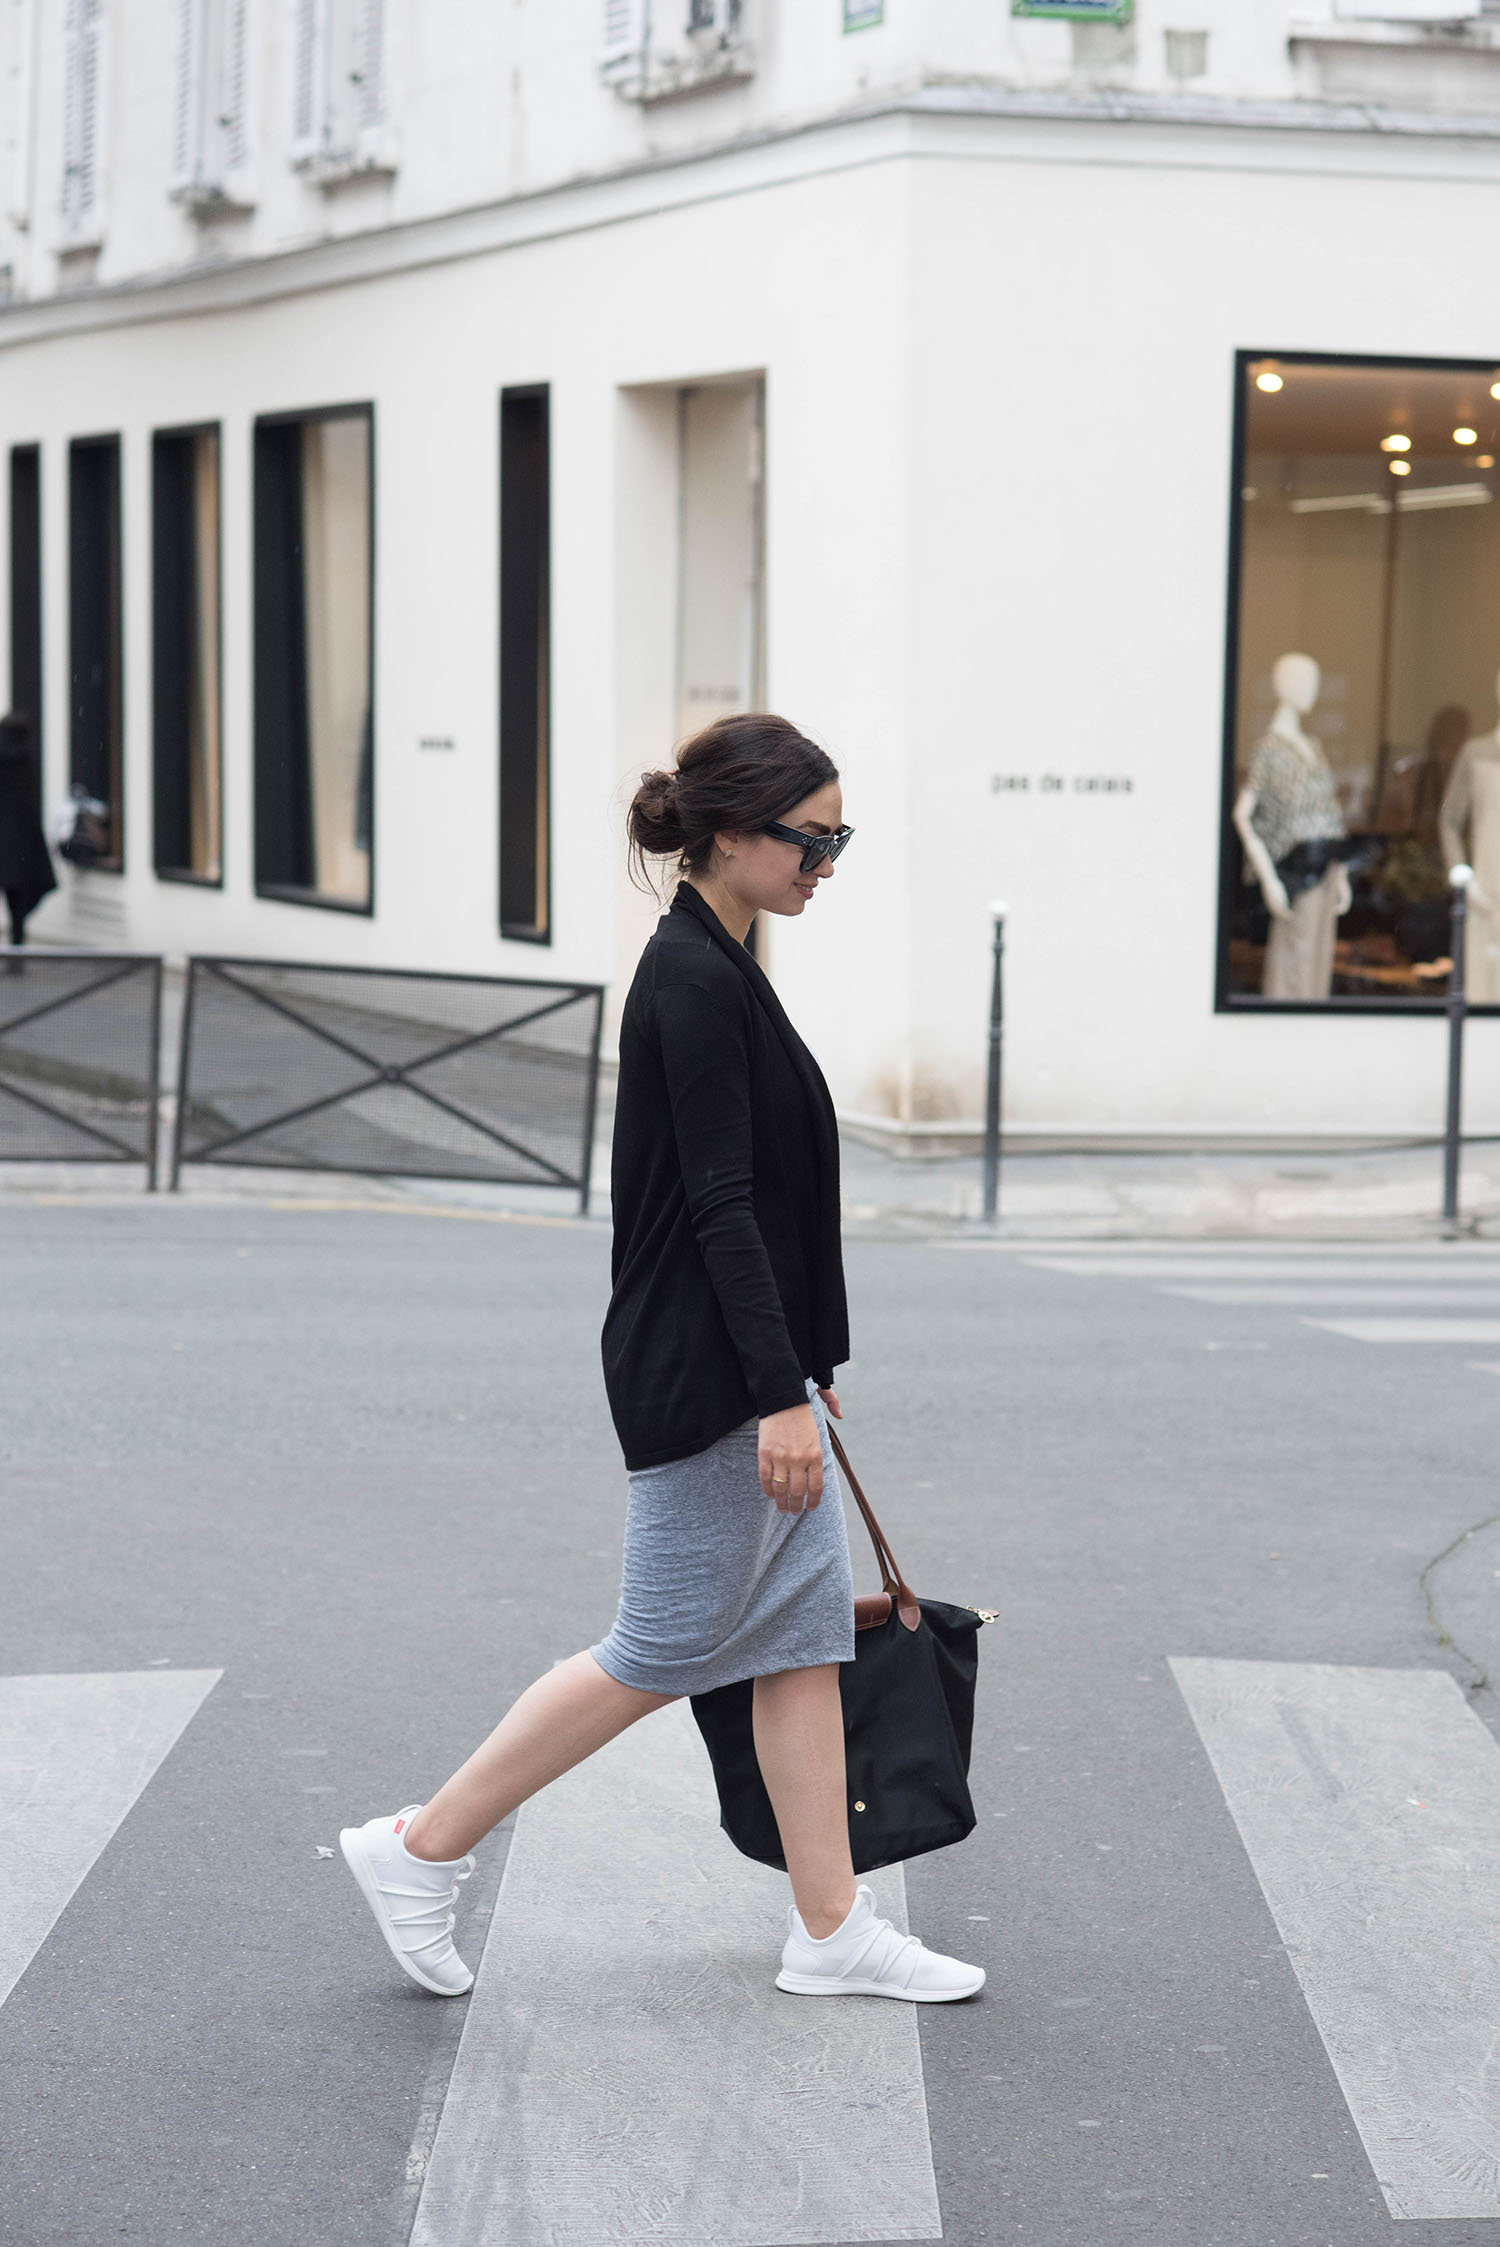 Fashion blogger Cee Fardoe of Coco & Vera walks the streets of Le Marais in Paris wearing Skye Footwear sneakers and a black Zara cardigan